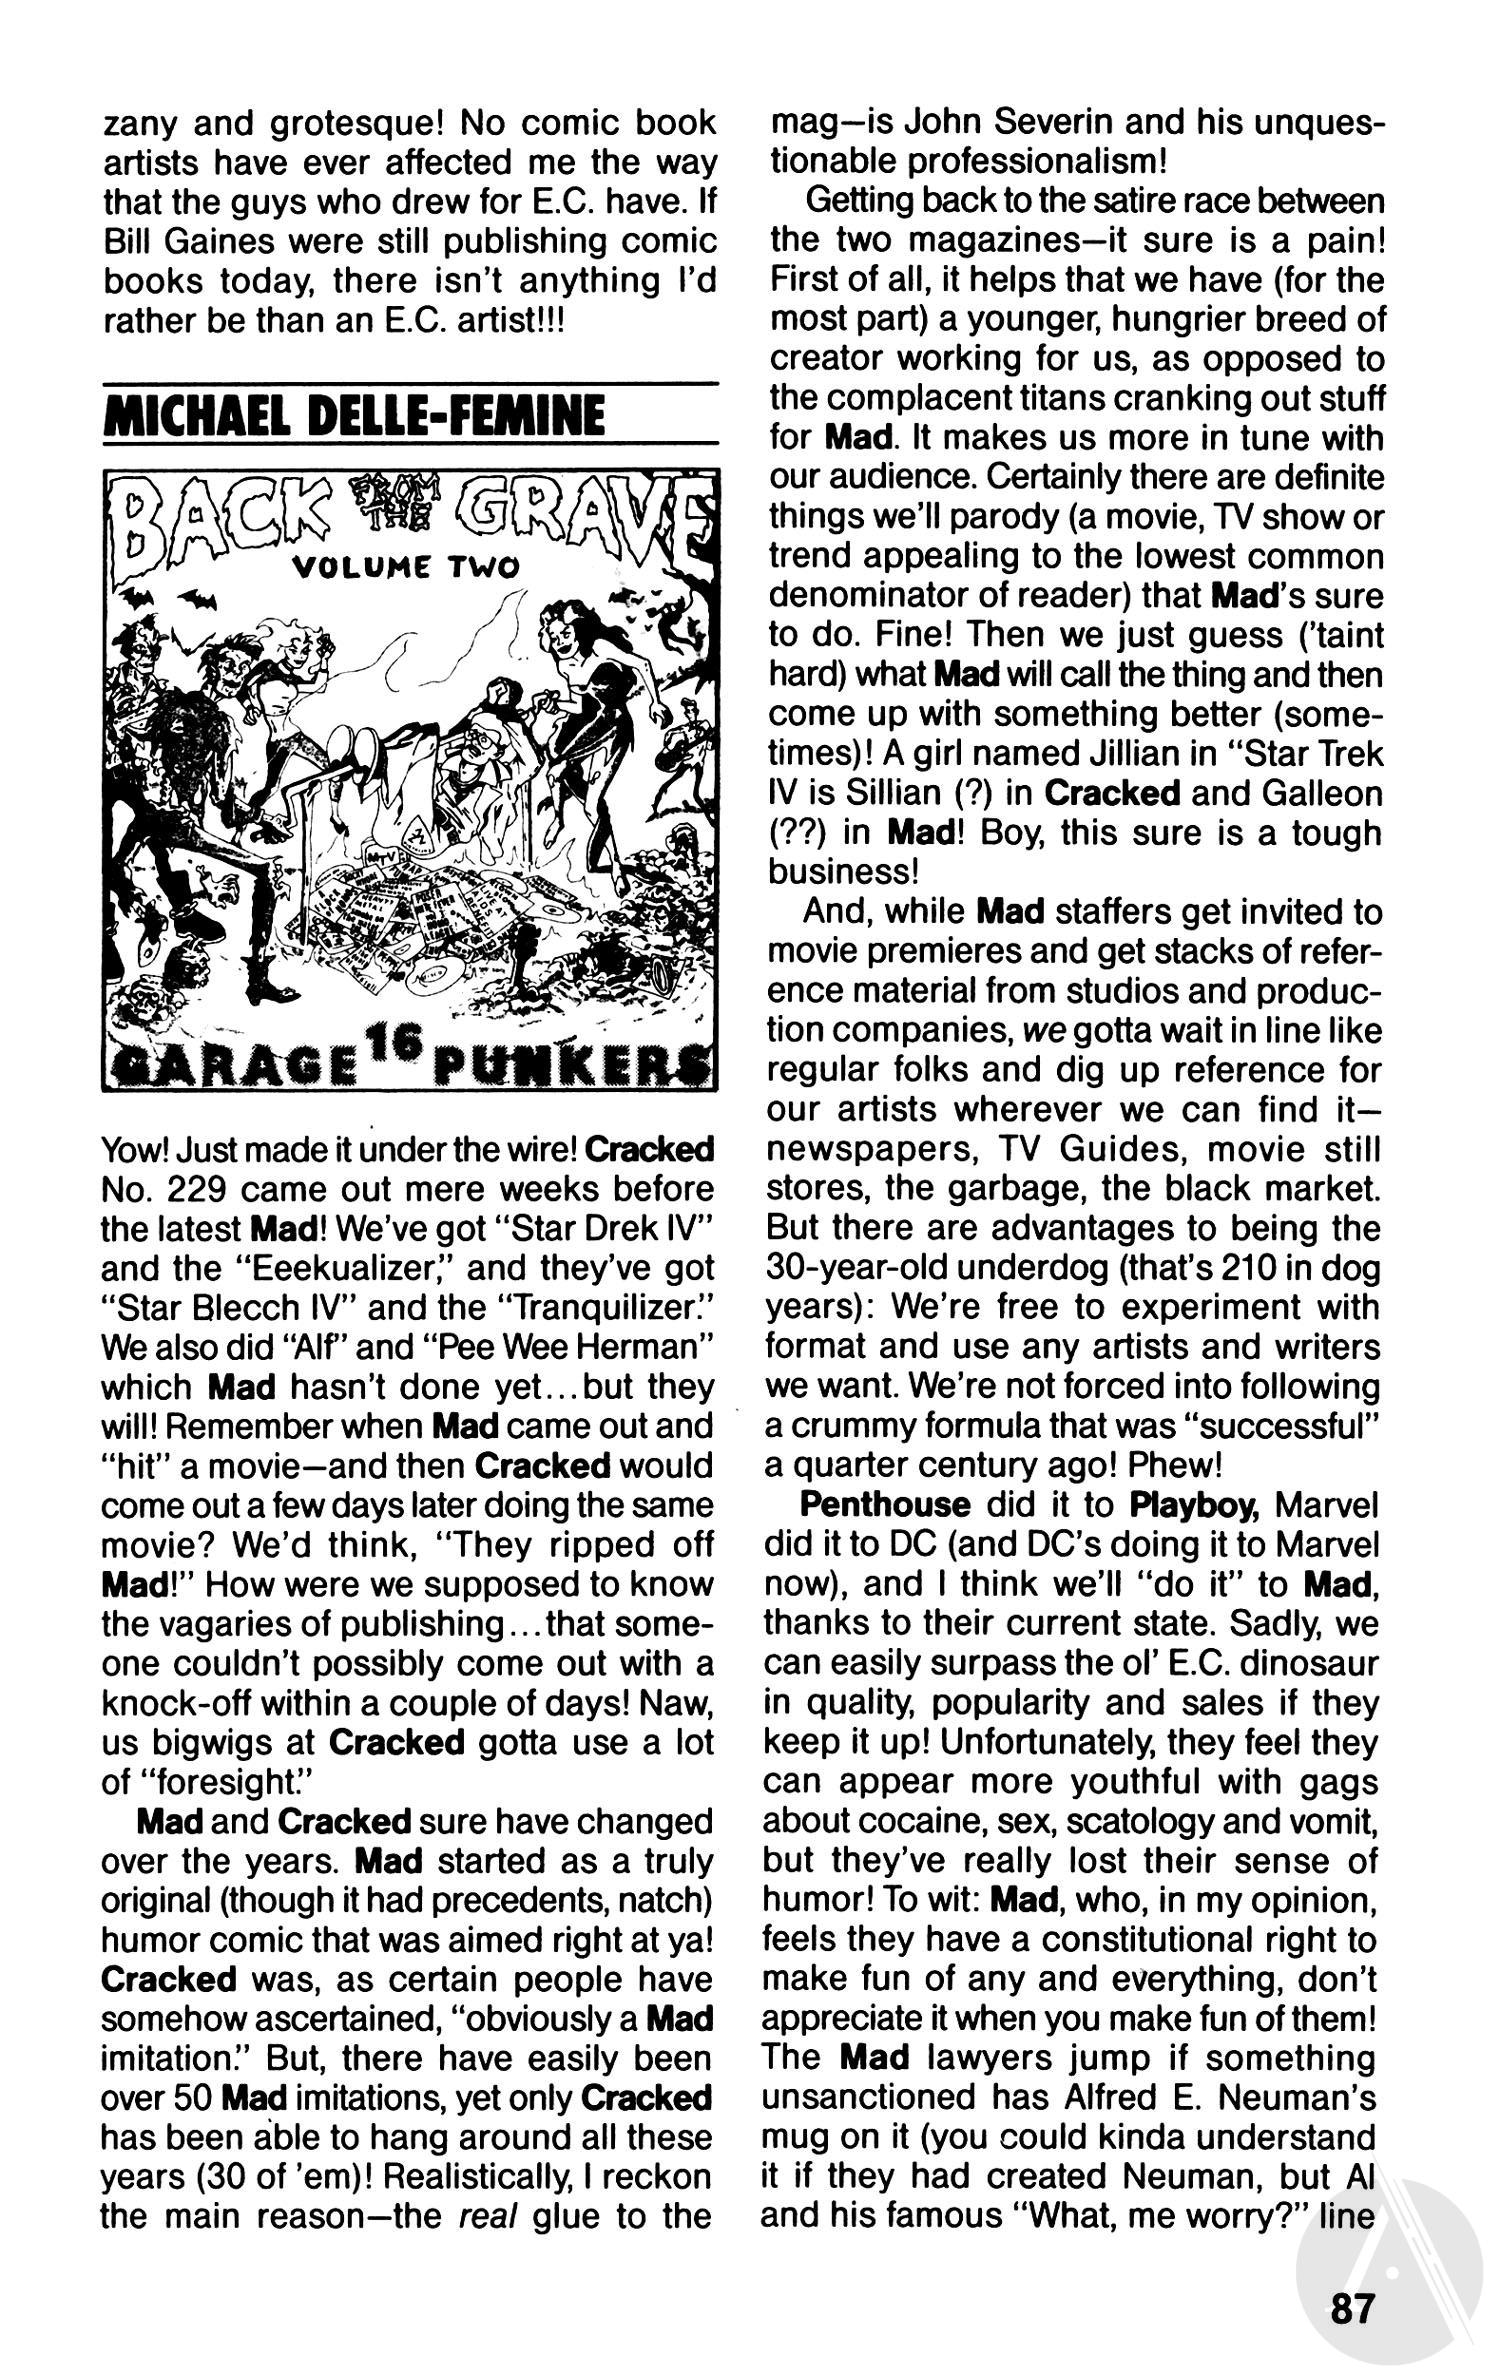 Read online Blab! comic -  Issue #2 - 87